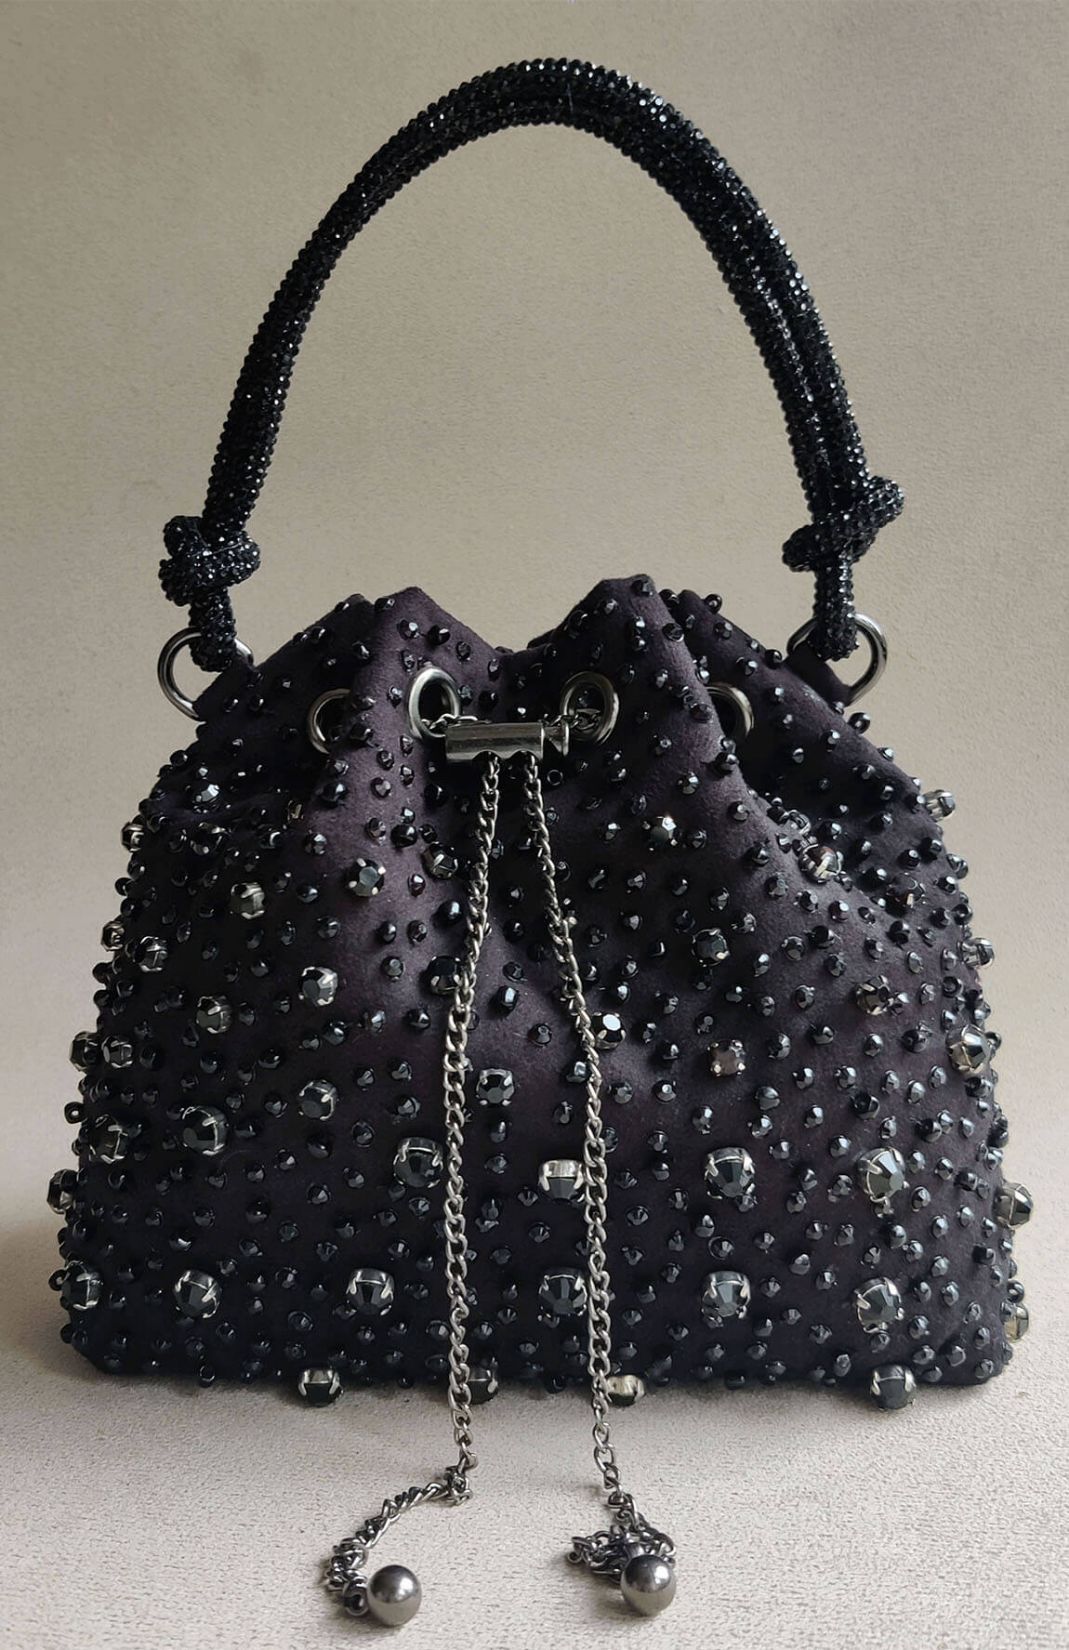 The Starry Bucket Bag In Black